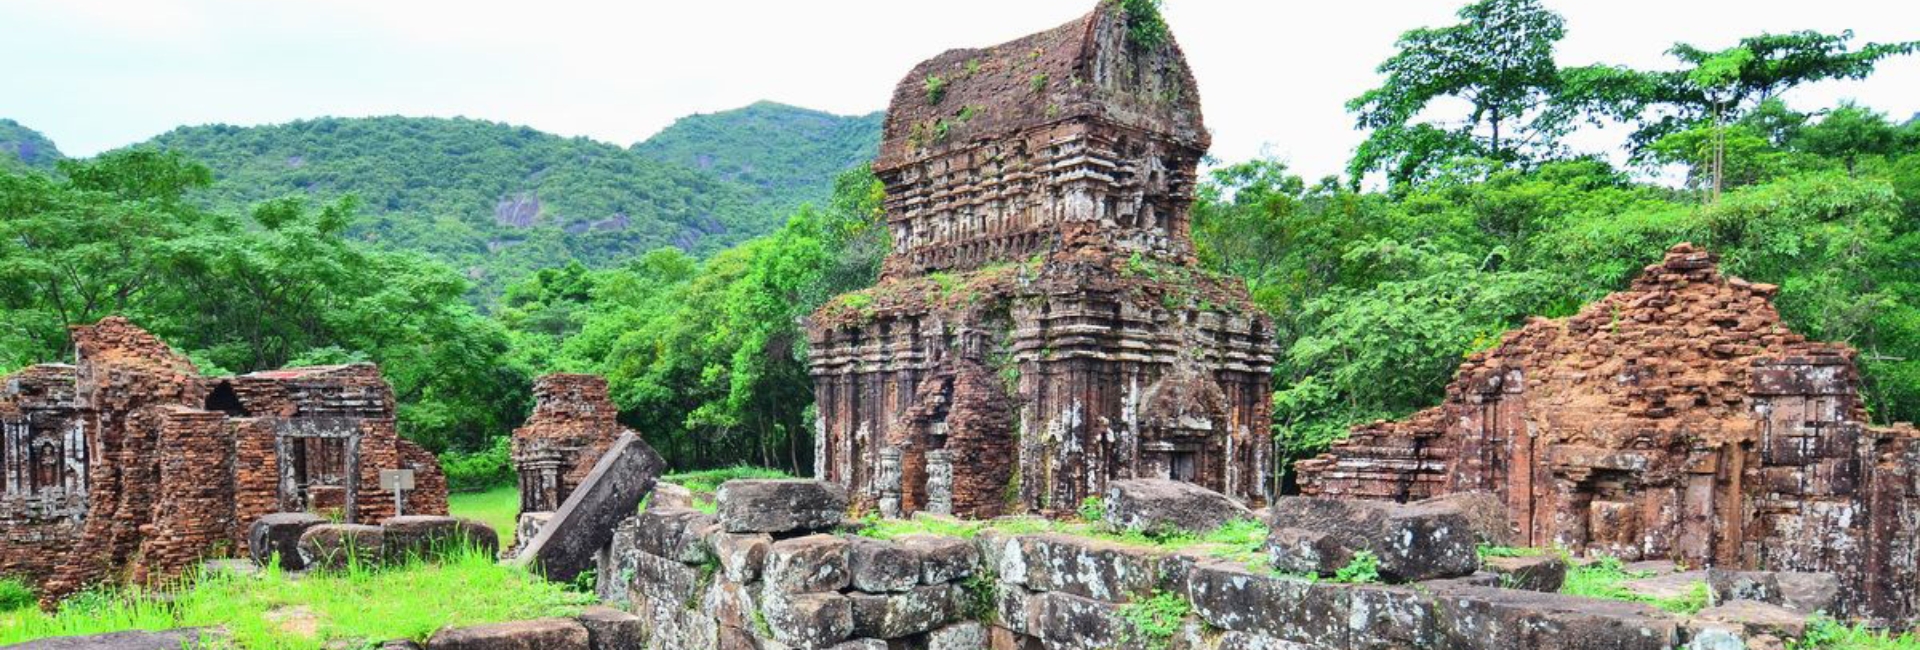 My Son Sanctuary: A Glimpse into the Ancient Cham Civilization in Danang